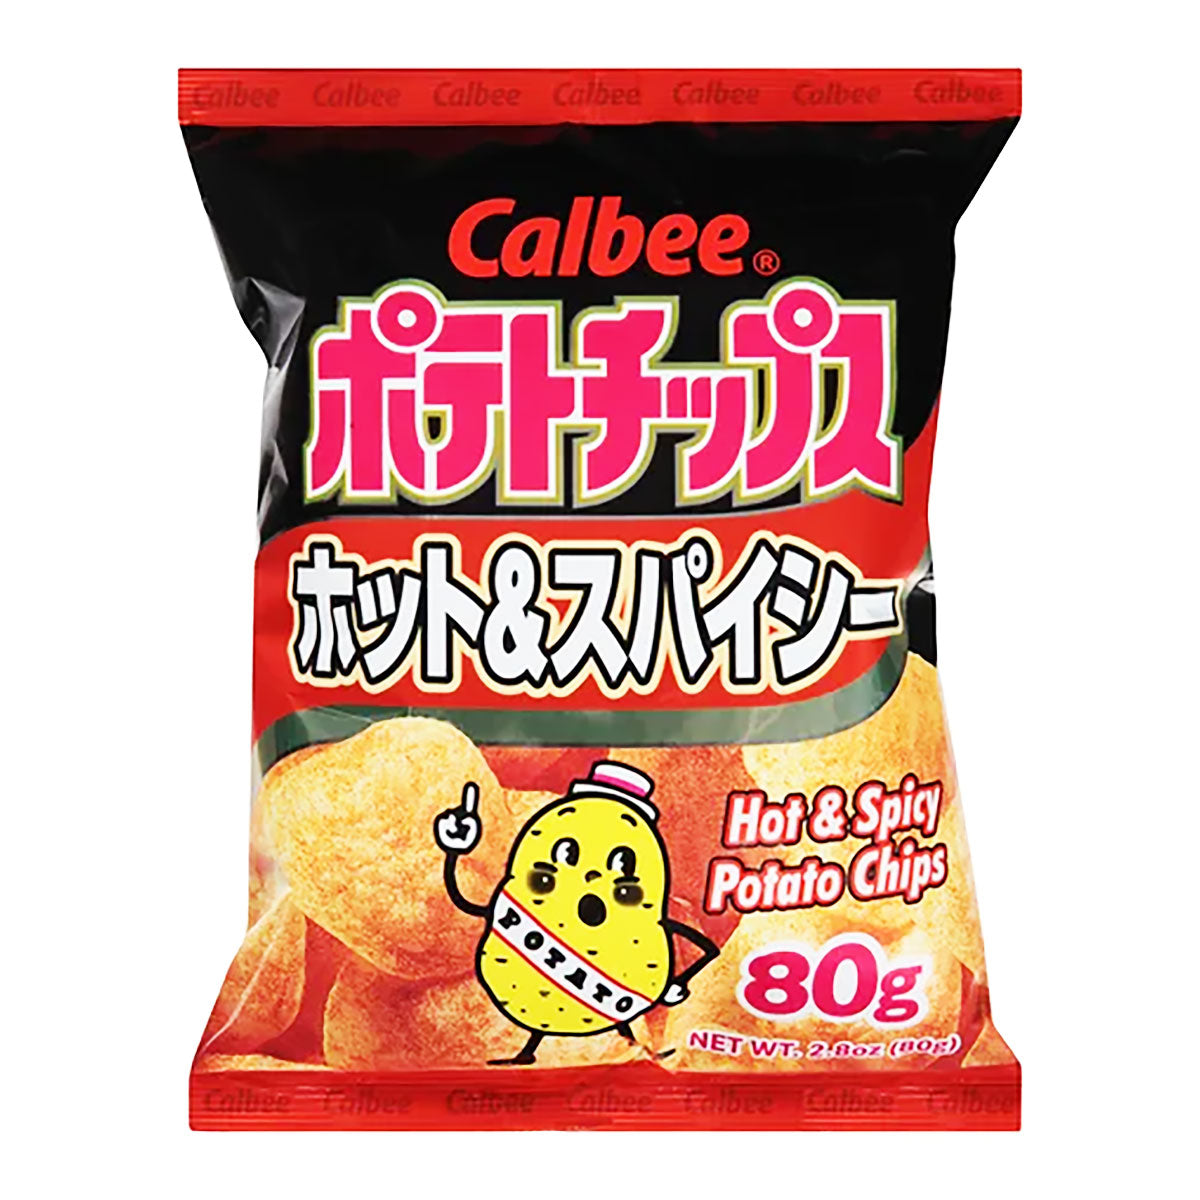 calbee potato chips hot & spicy - 2.8oz